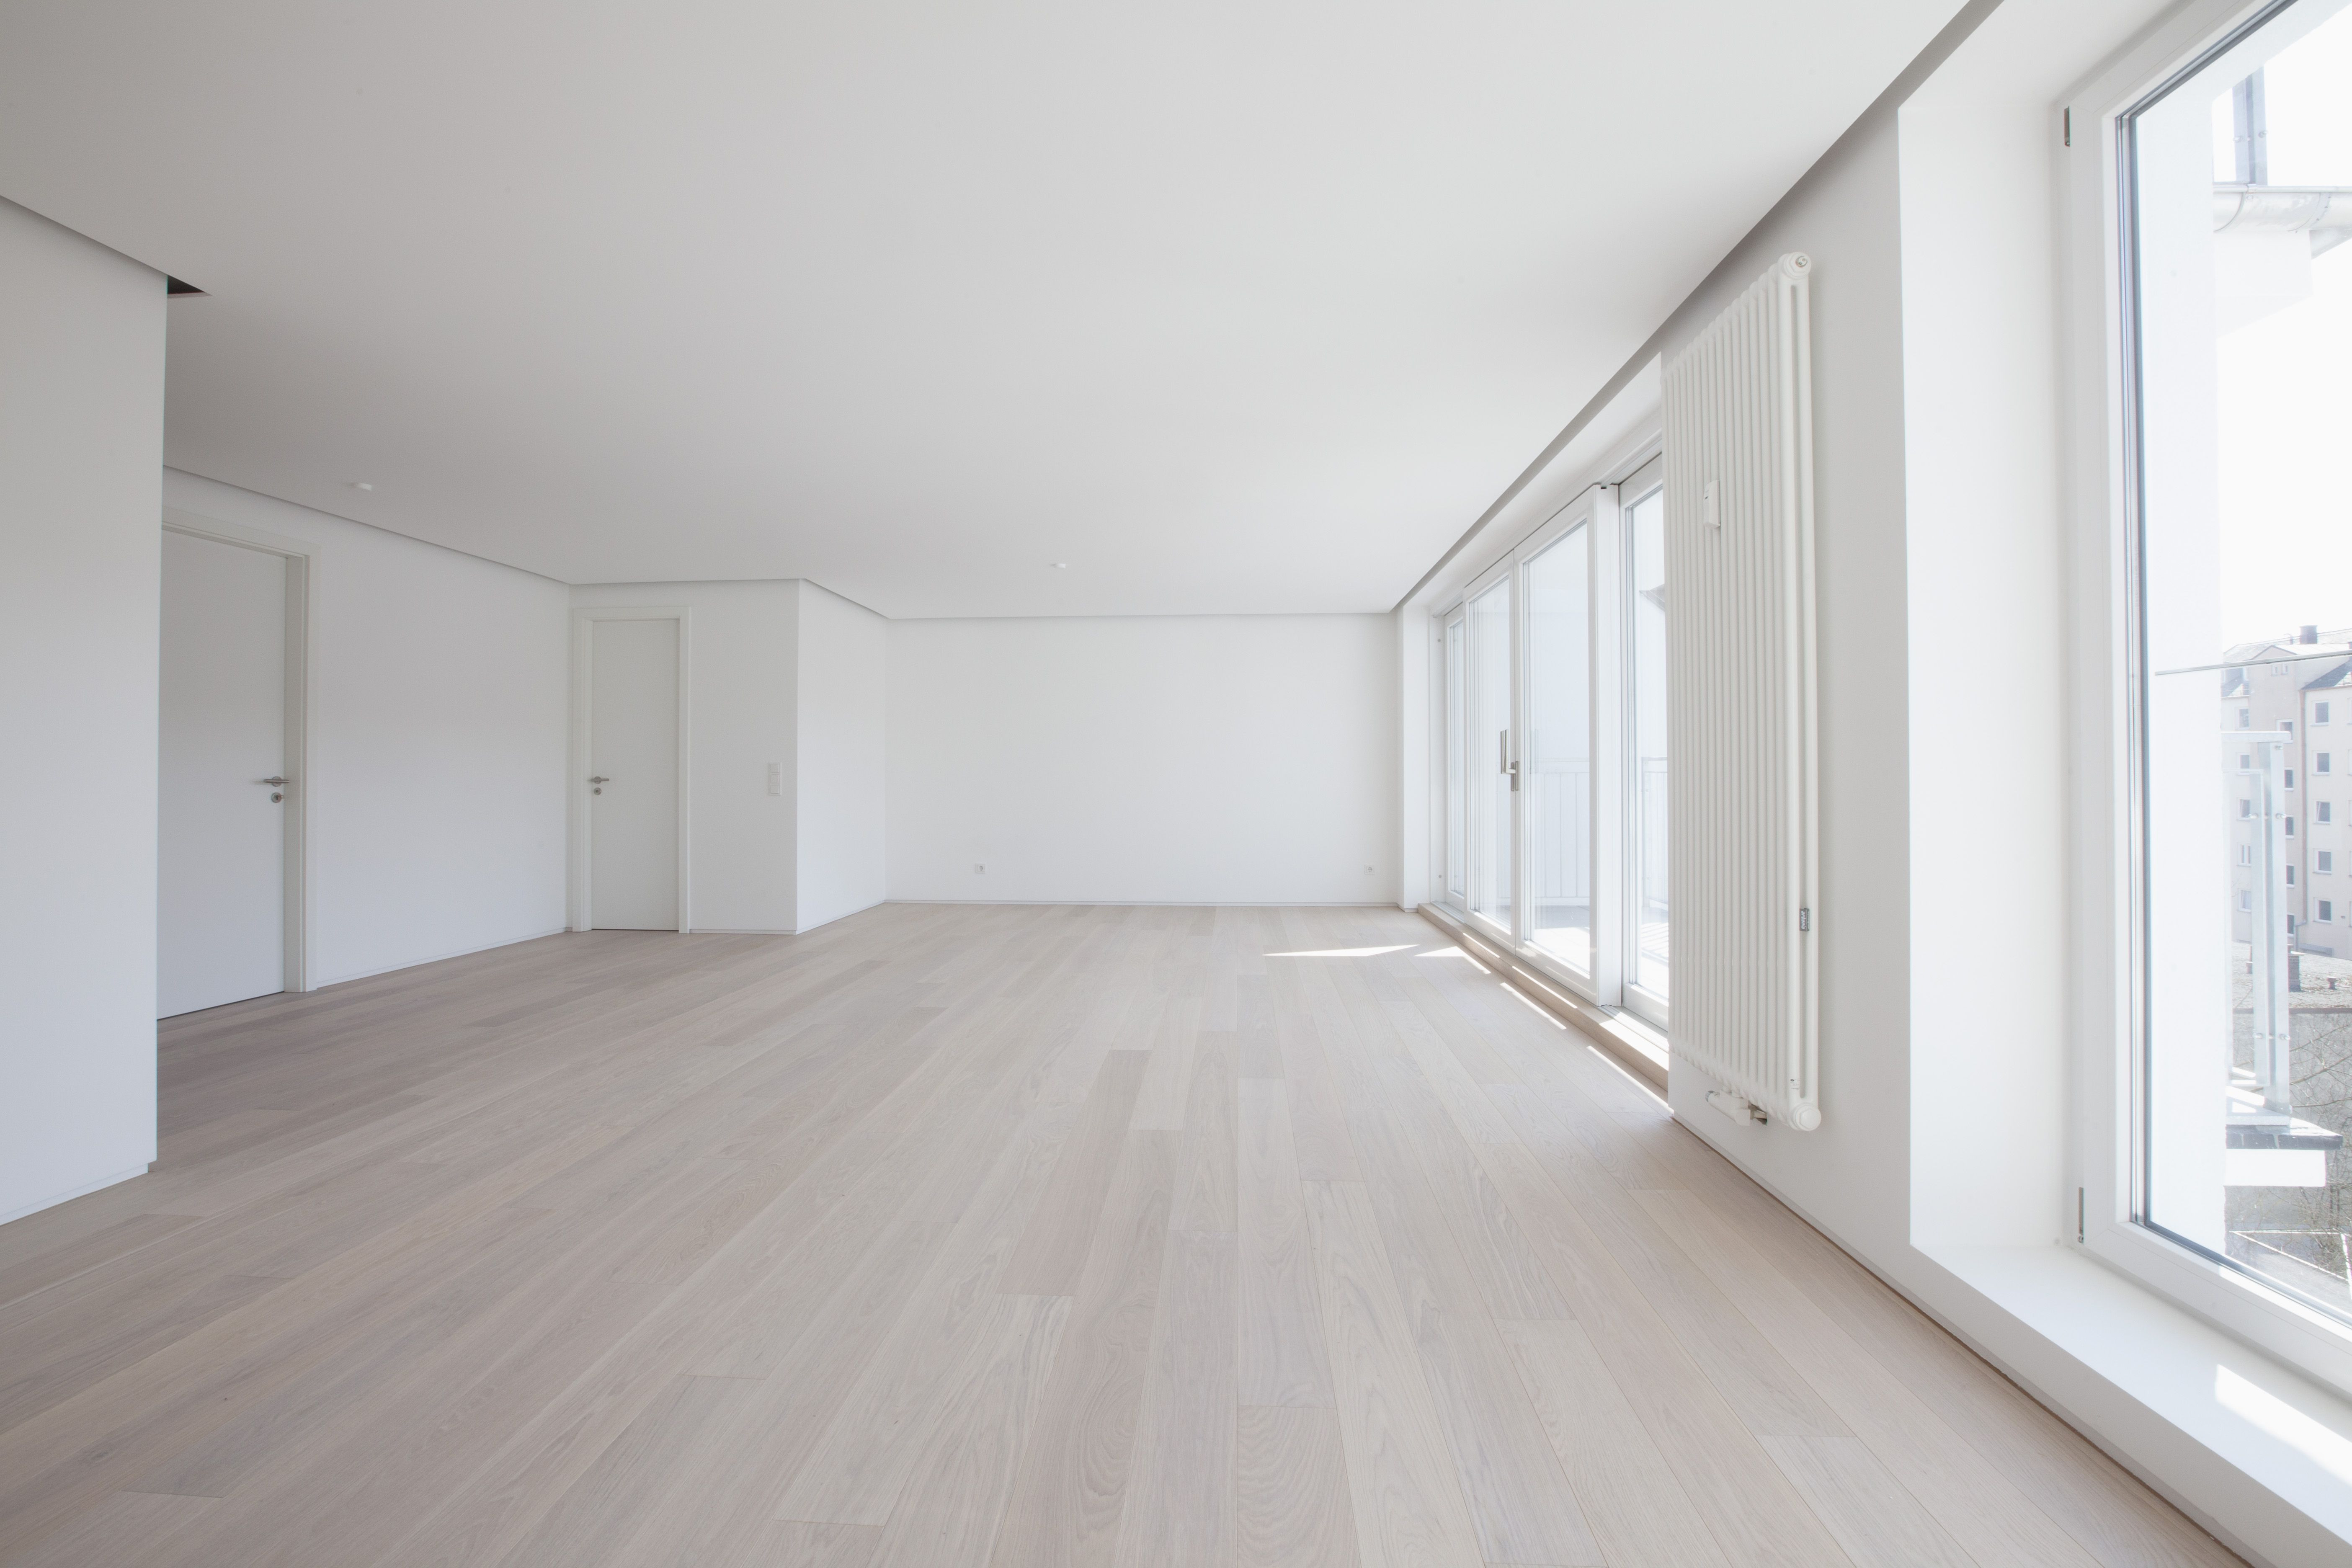 wood filler for gaps in hardwood floors of basics of favorite hybrid engineered wood floors regarding empty living room in modern apartment 578189139 58866f903df78c2ccdecab05